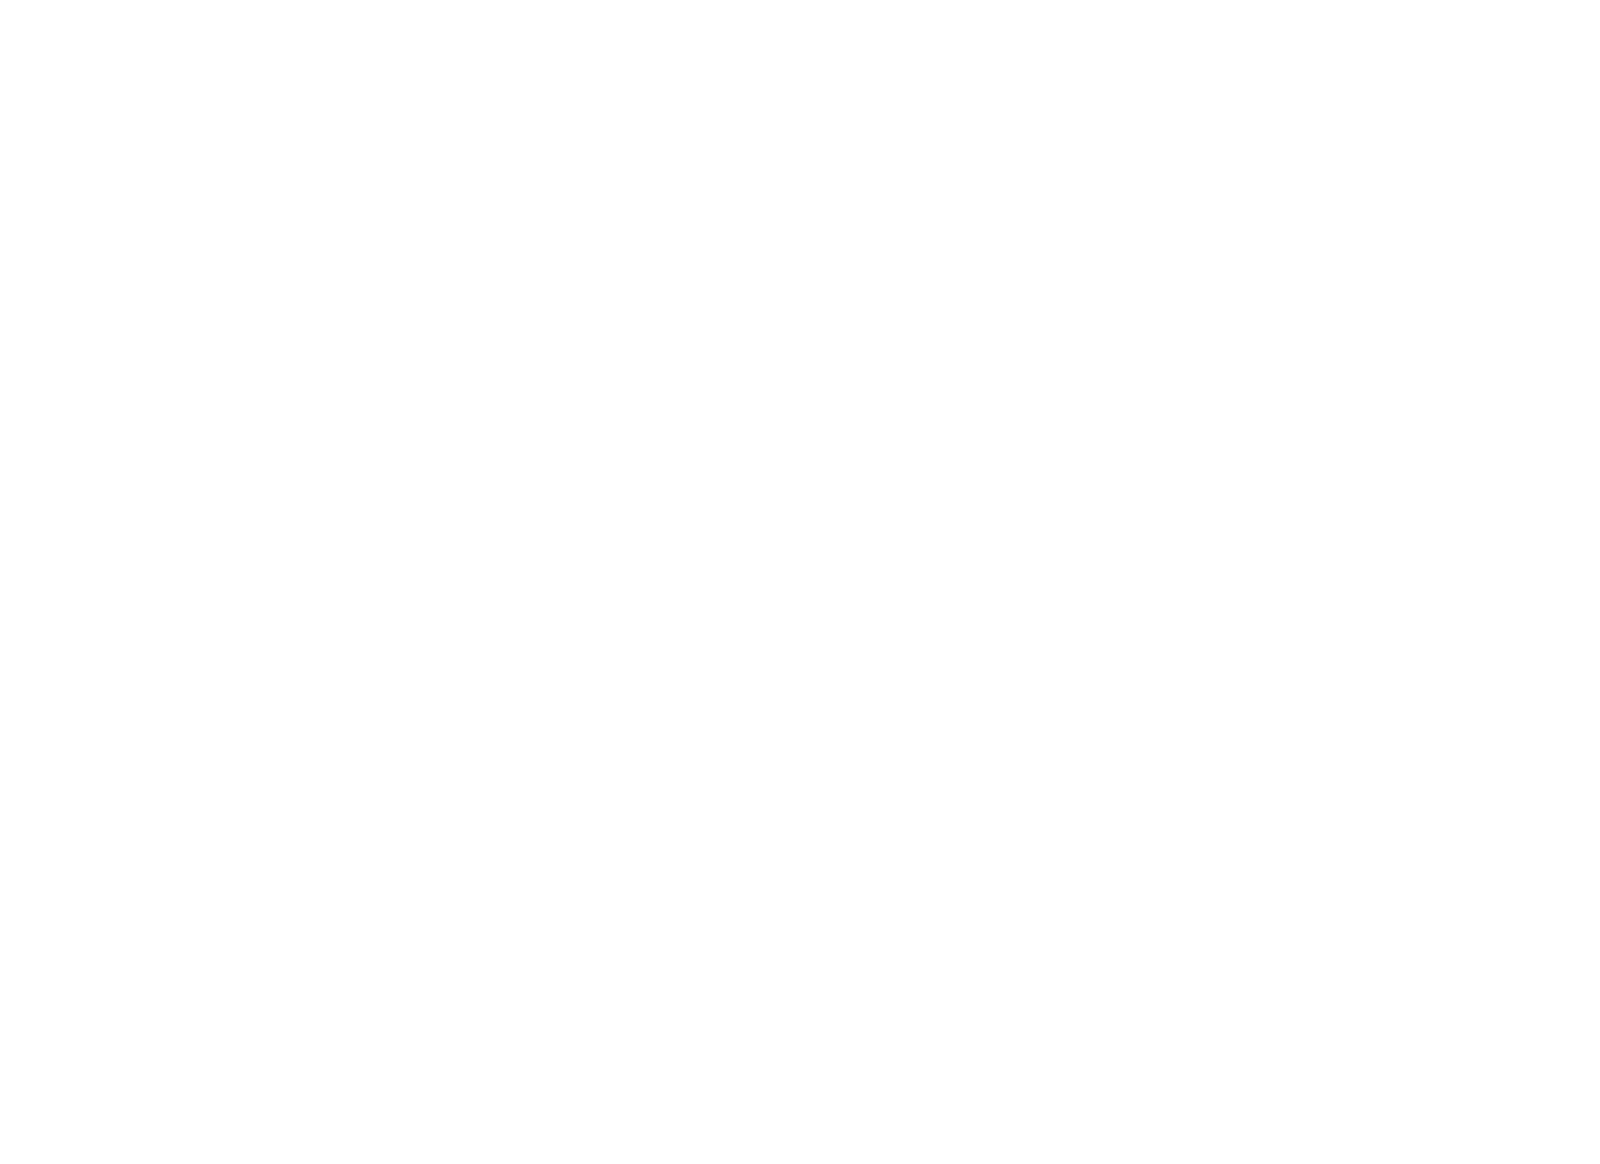 cleanair-logo_globe-over-wordmark-descr-with-R-white